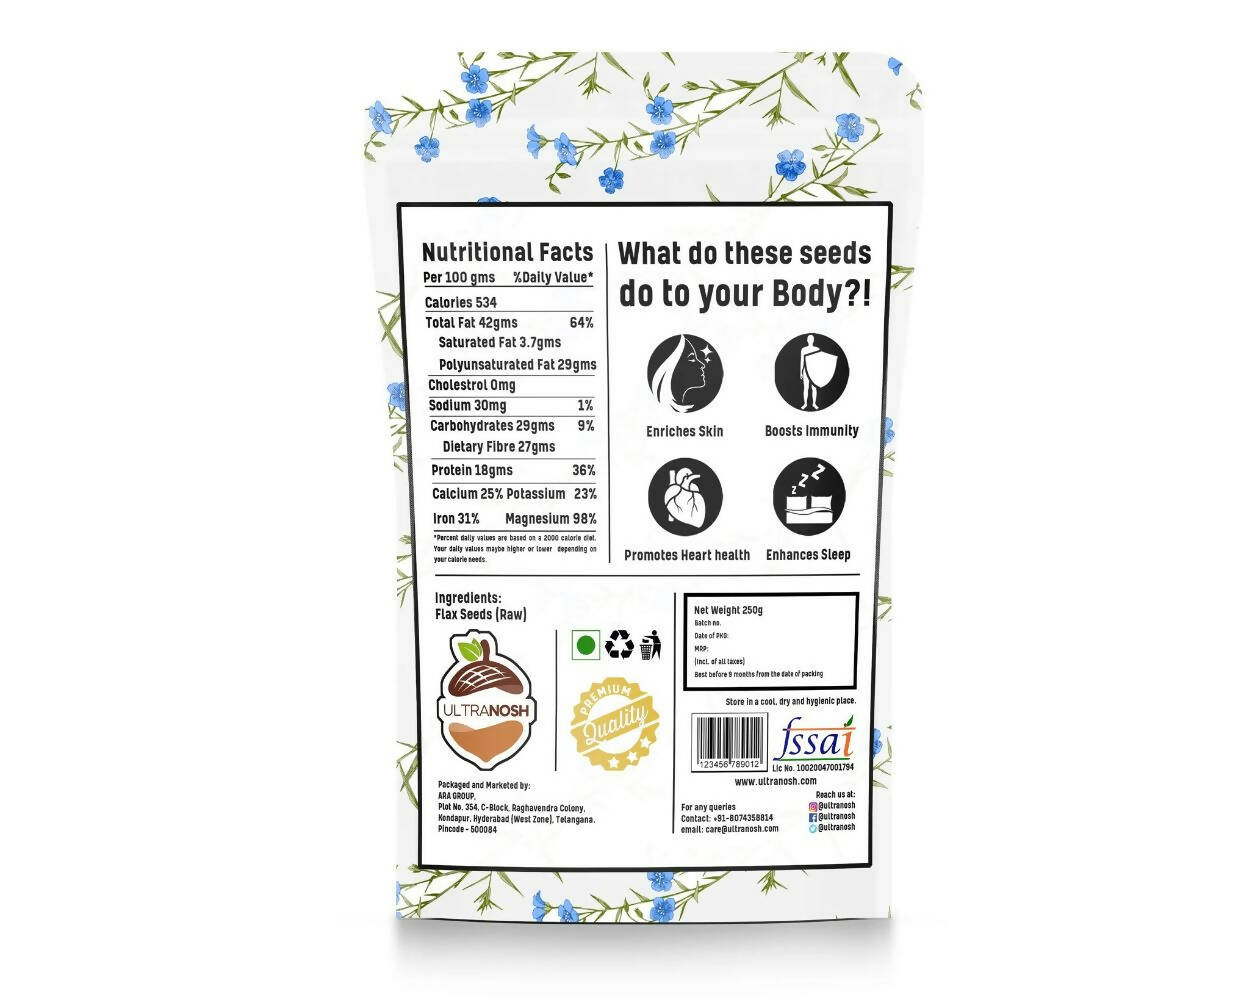 Ultranosh Premium Quality Flax Seeds - Distacart